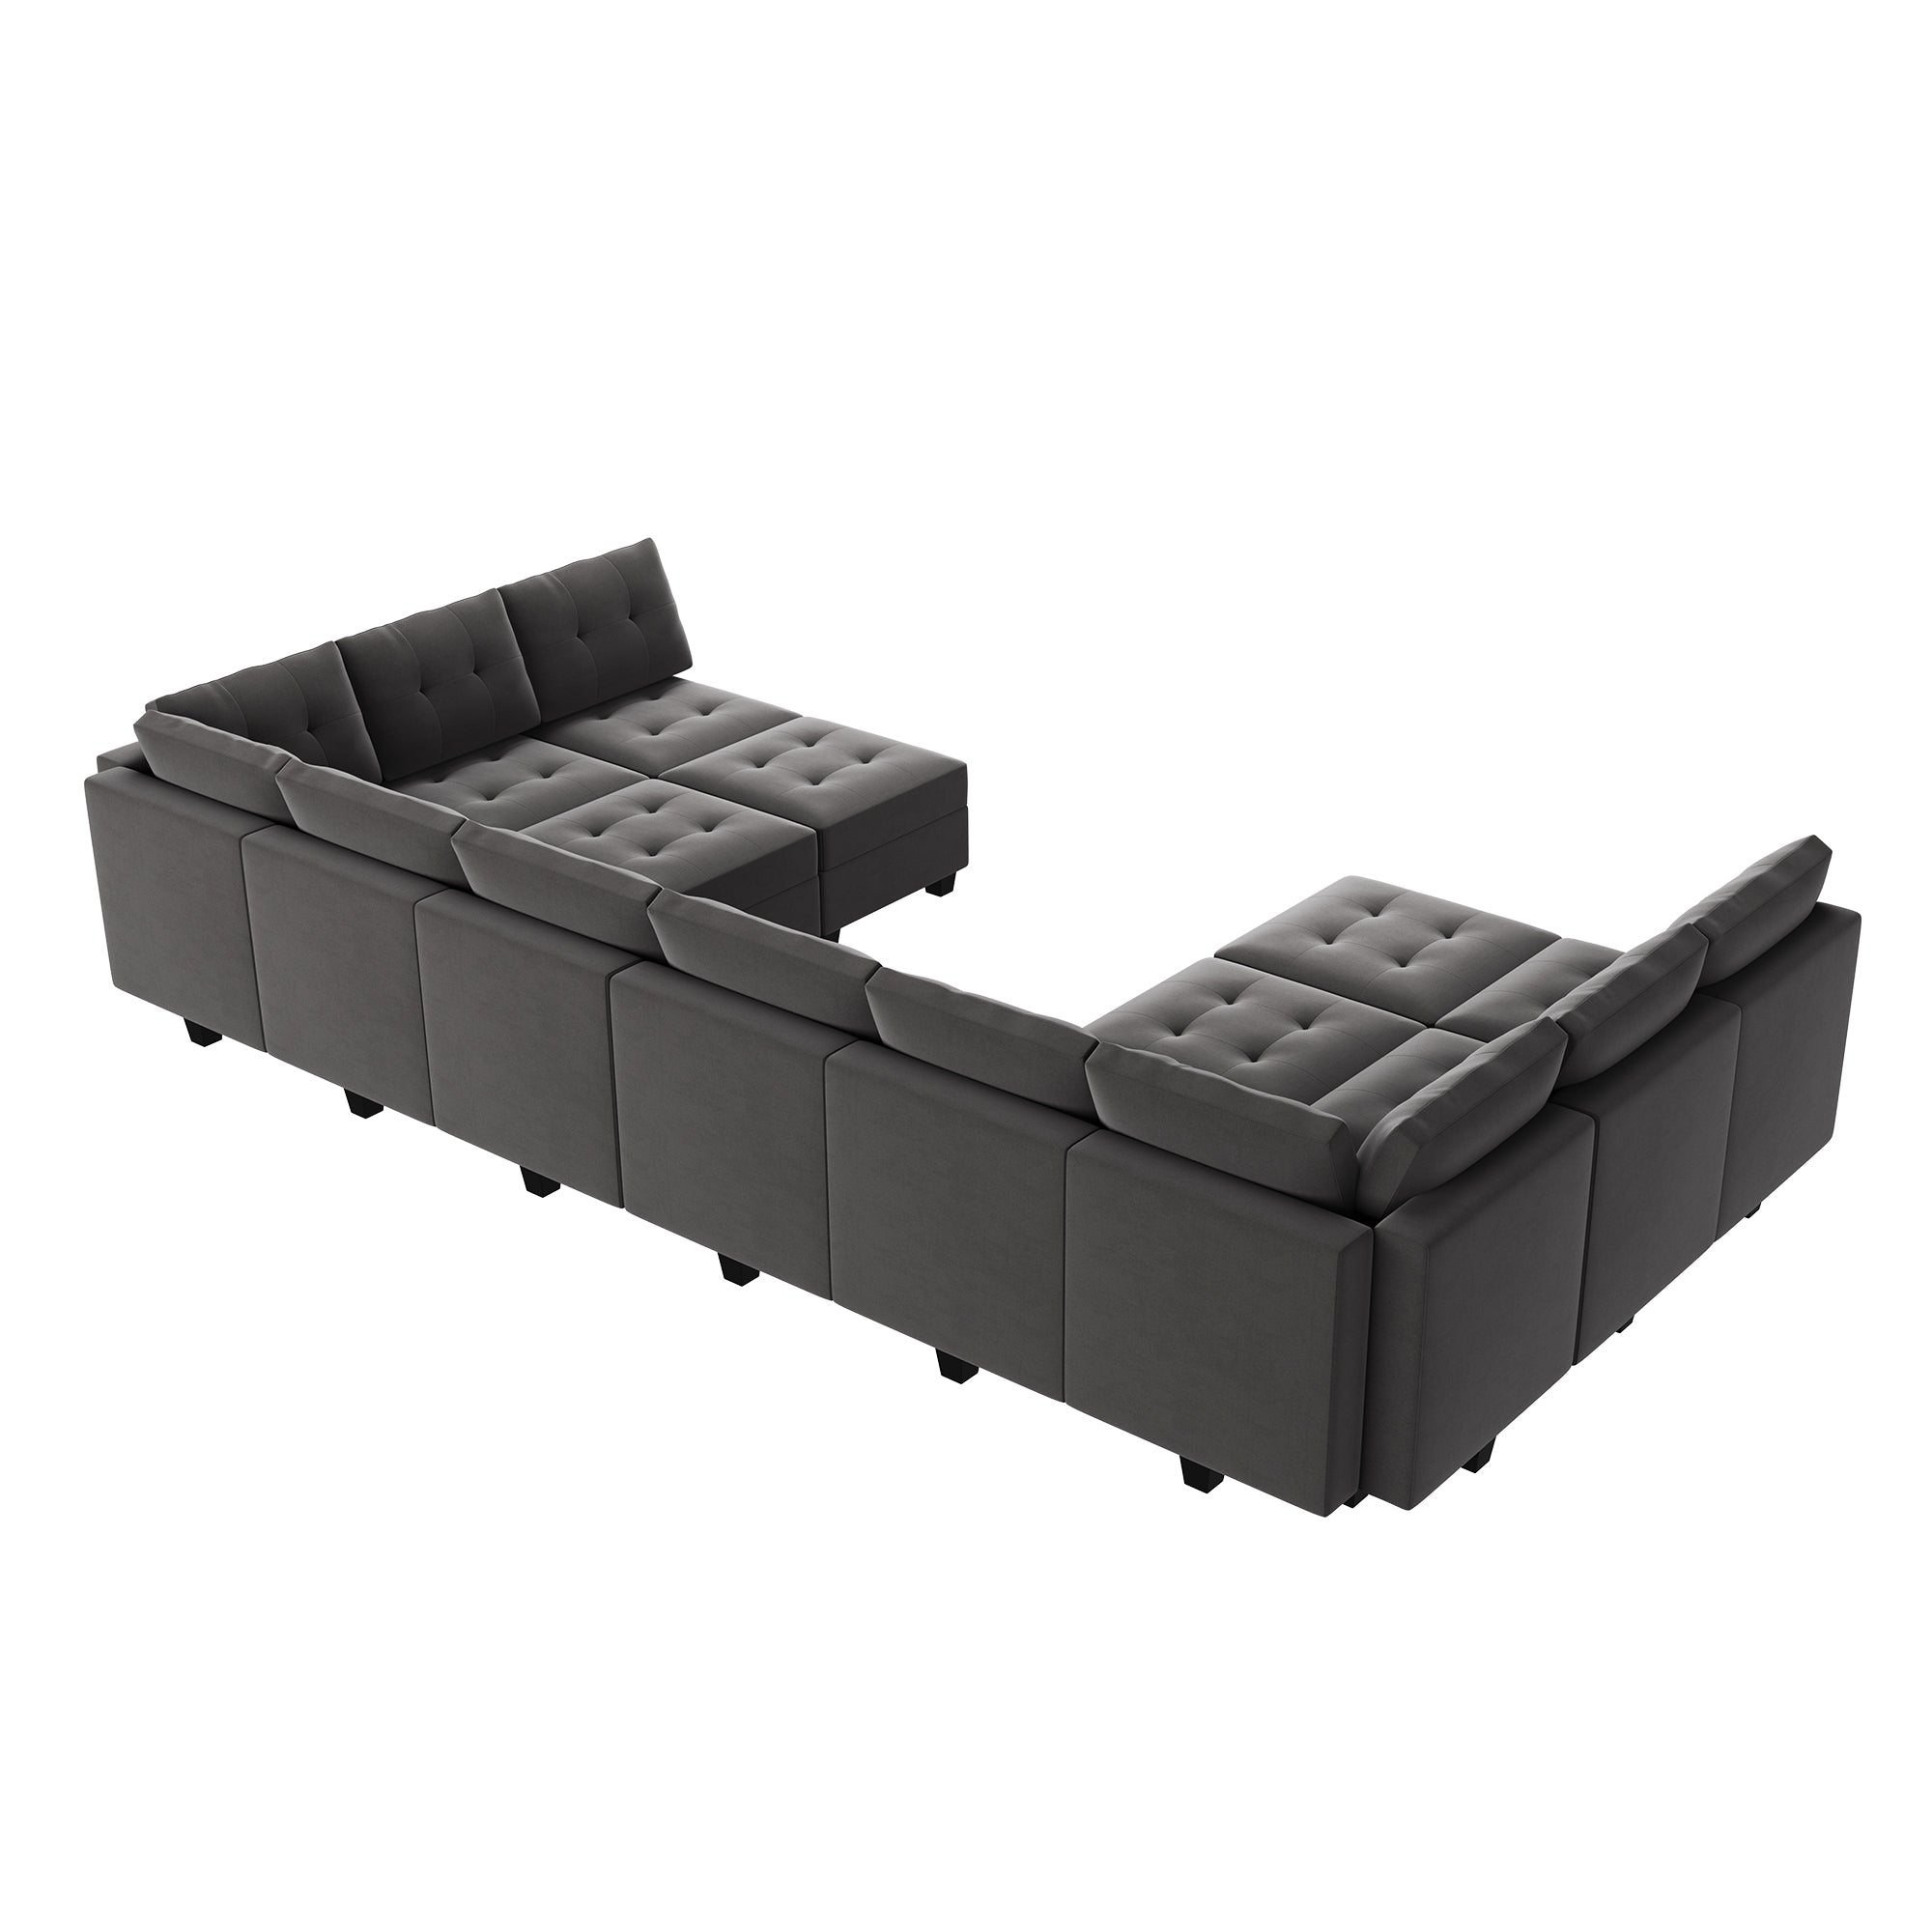 HONBAY Velvet Tufted U-Shaped Modular Sofa with Storage & Reversible Chaise